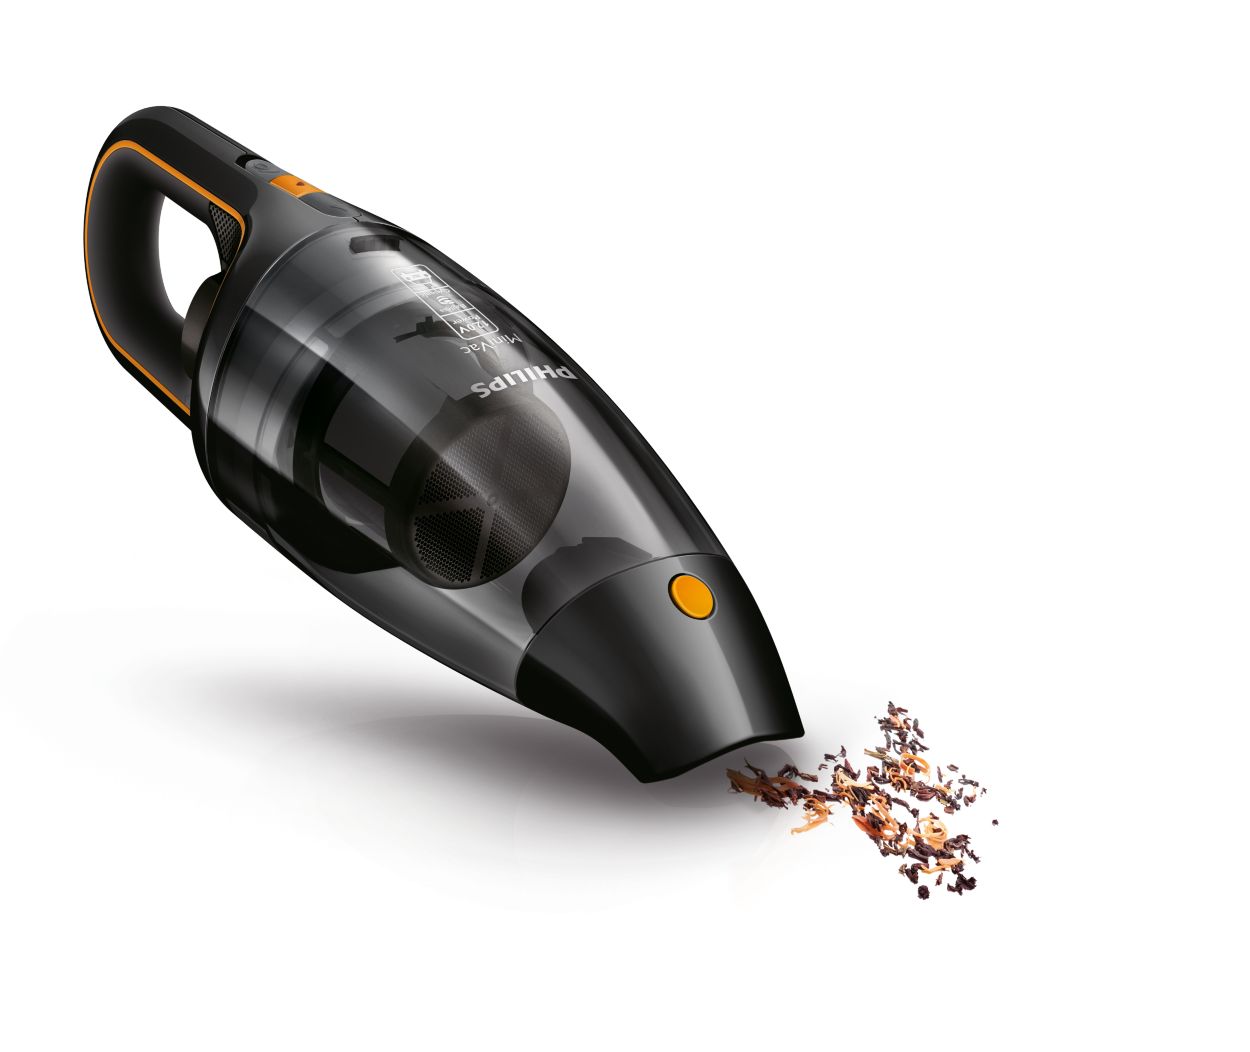 MiniVac Handheld vacuum cleaner FC6149/02 | Philips